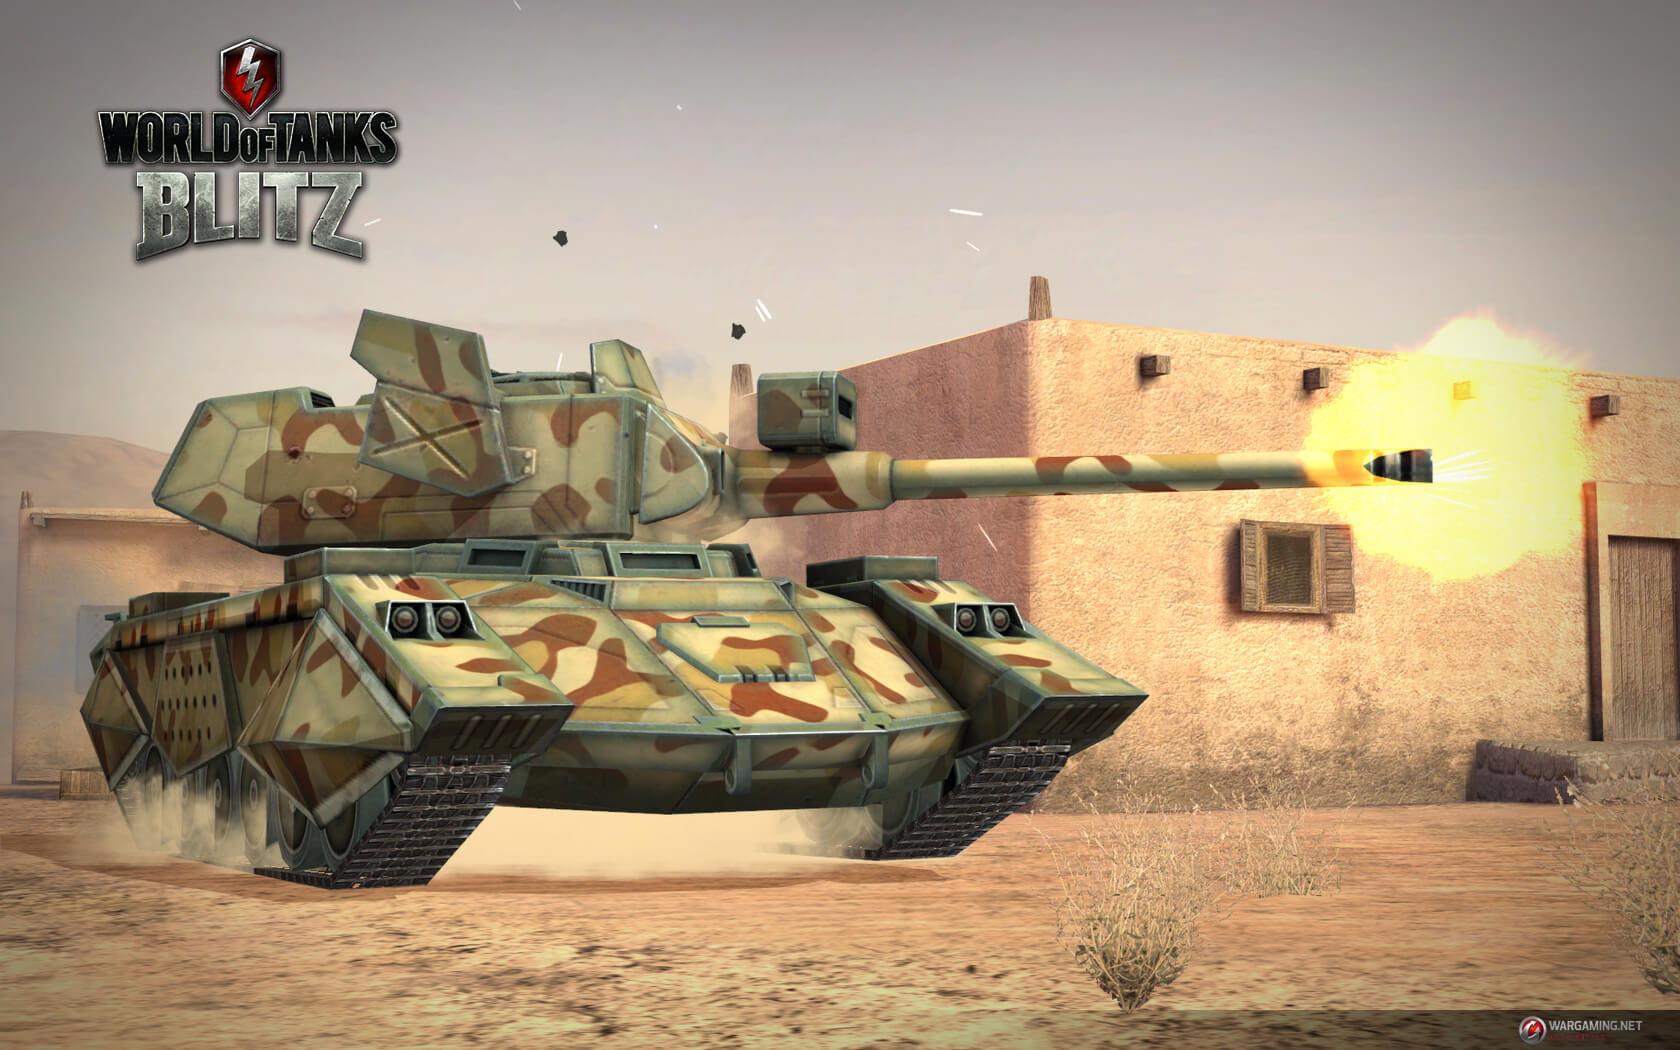 world of tanks blitz free download full version pc